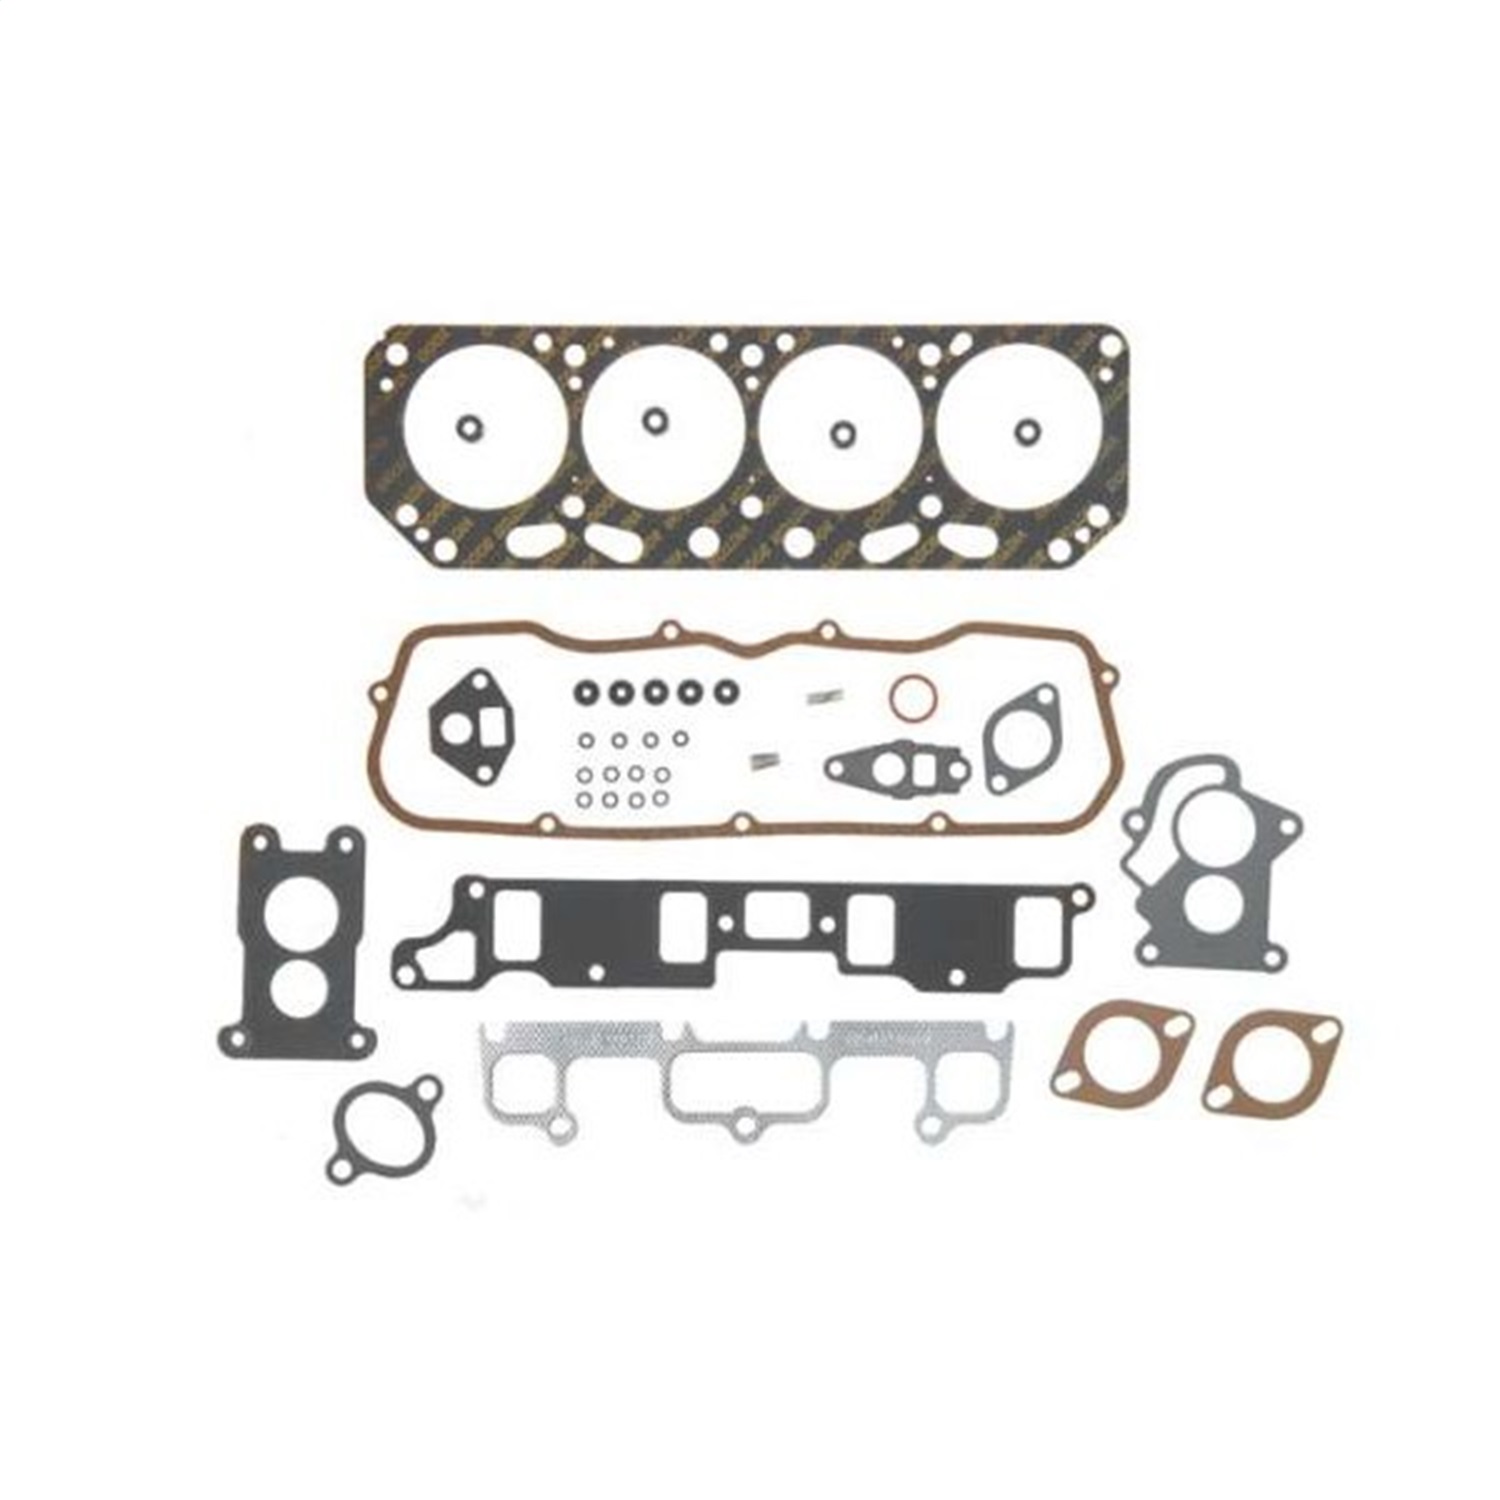 Omix-Ada Omix-Ada 17441.03 Engine Gasket Set Fits 80-83 CJ5 CJ7 Scrambler